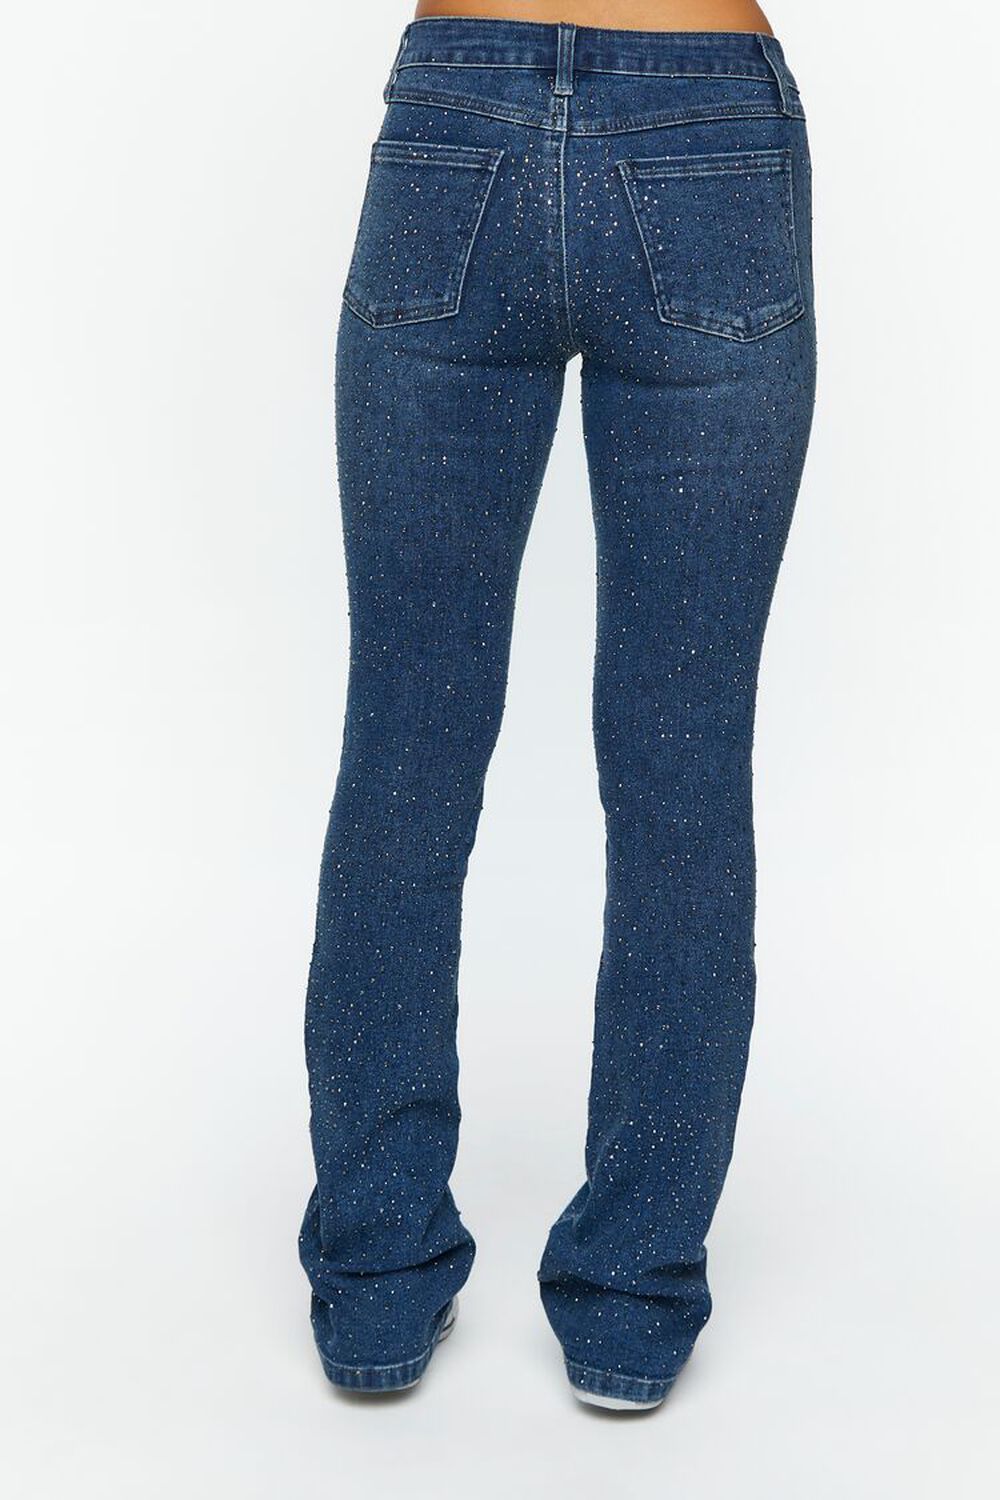 DARK DENIM Rhinestone Mid-Rise Bootcut Jeans, image 3